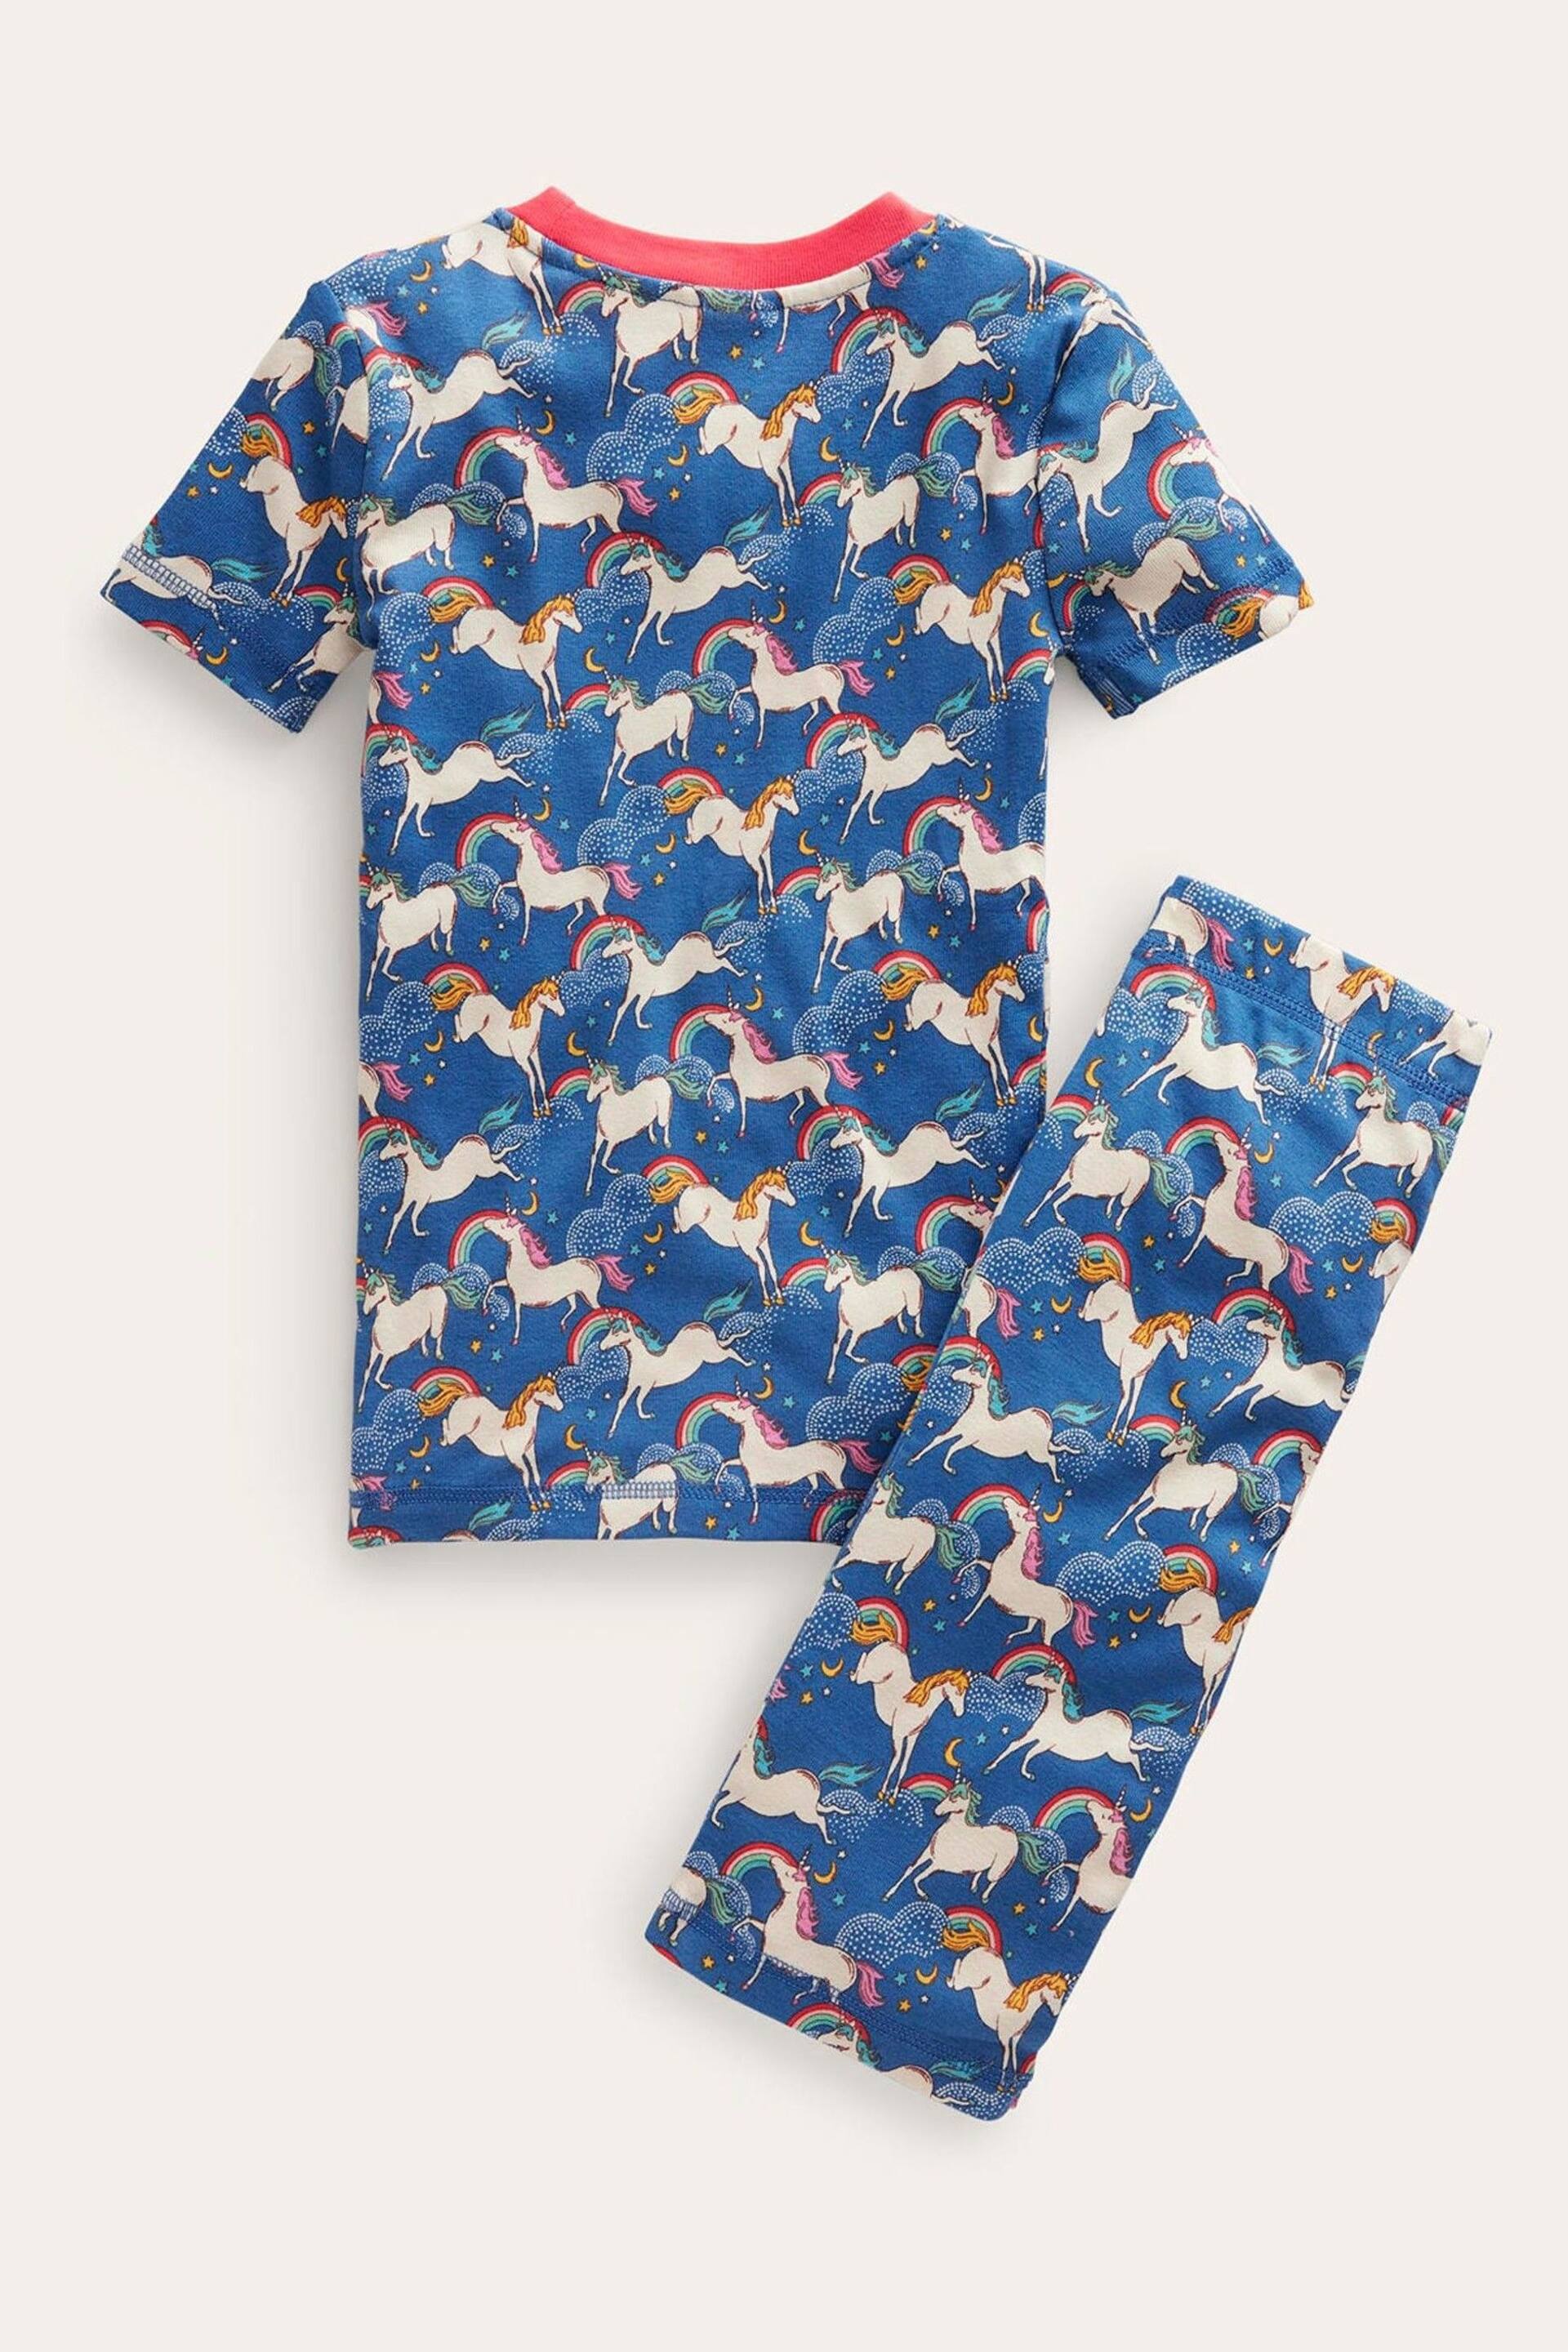 Boden Blue Snug Short John Pyjamas - Image 2 of 2